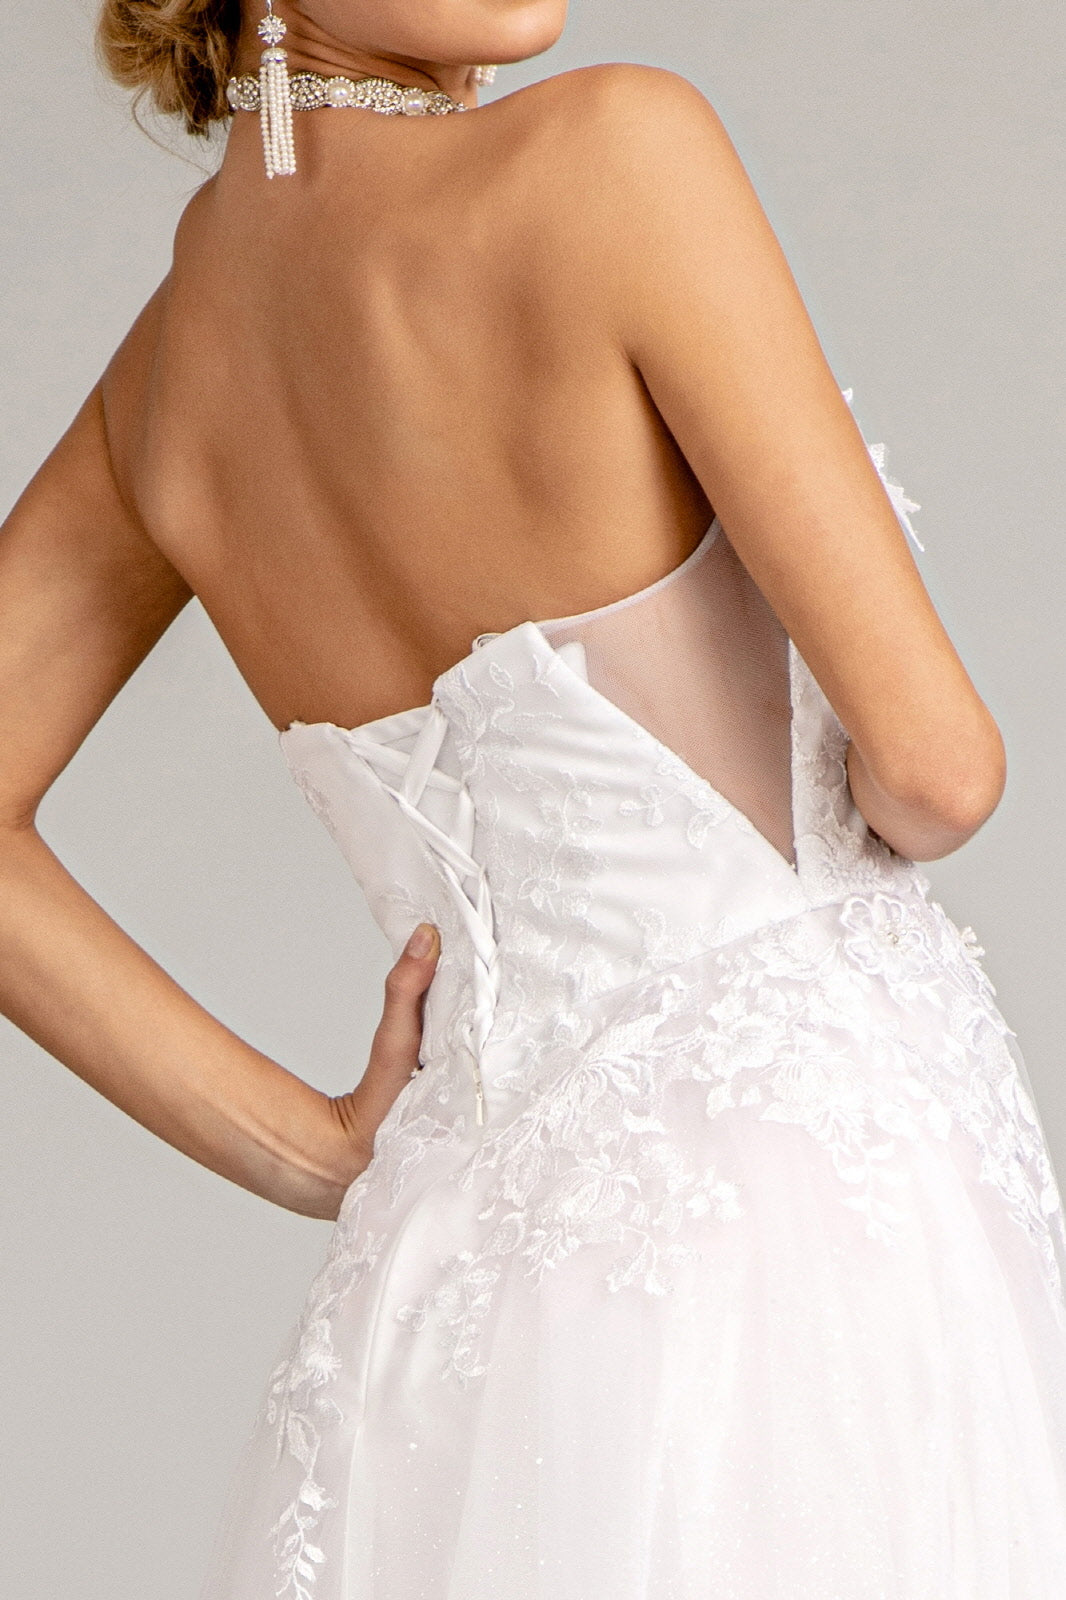 3-D Flower Embellished Mesh Wedding Gown Rhinestone and Glitter Embellished GLGL3010 Elsy Style WEDDING GOWNS